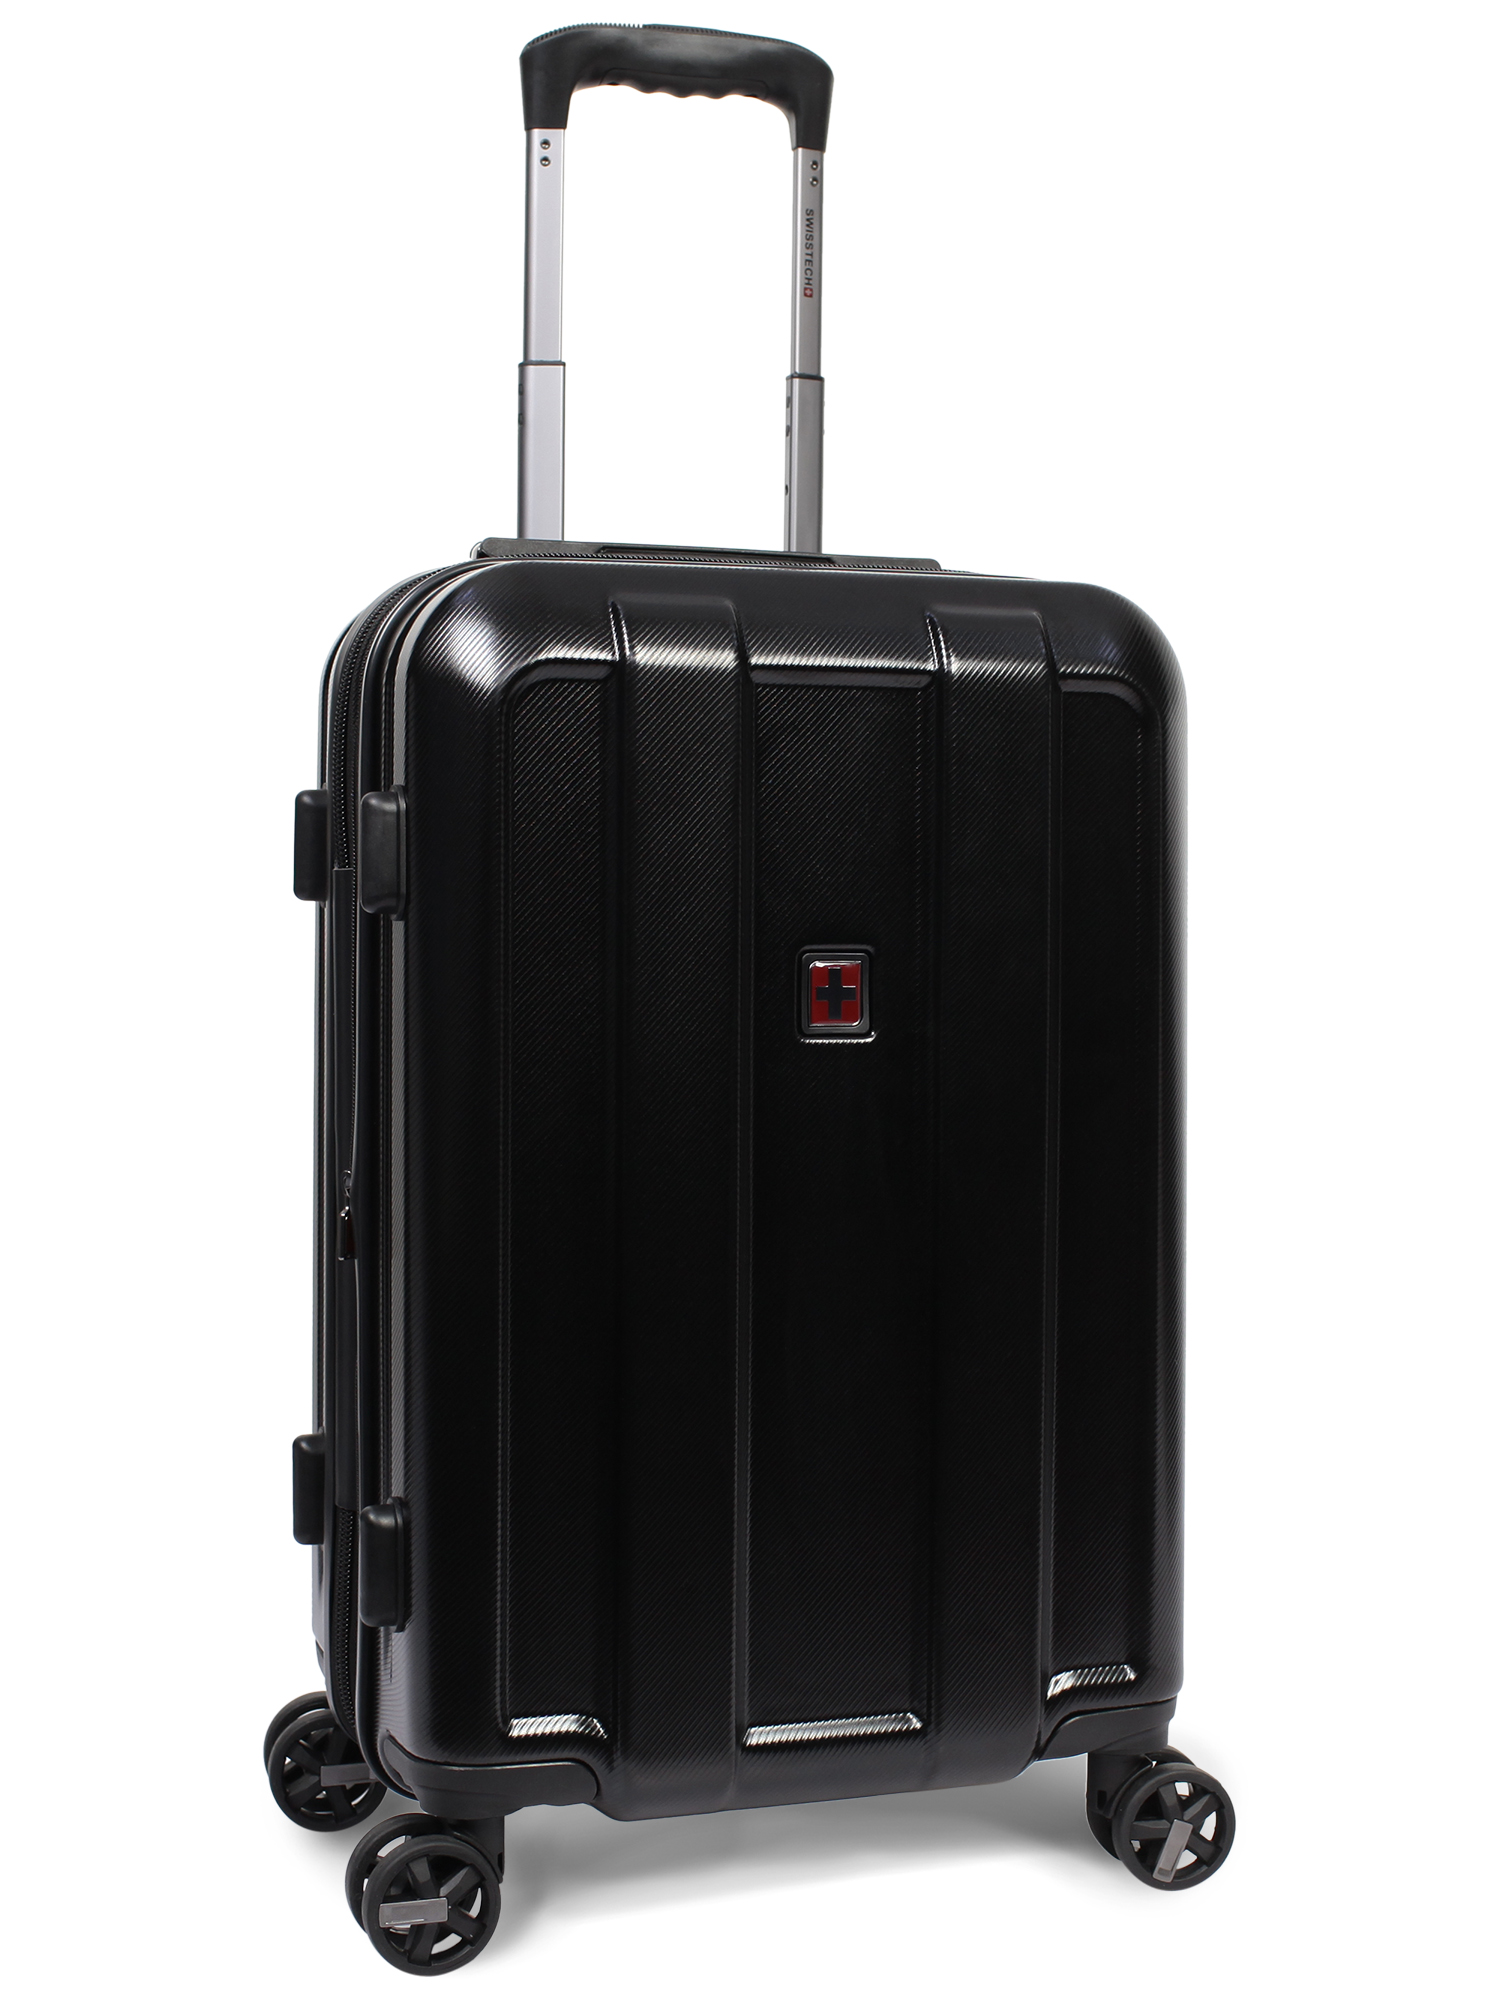 SwissTech 2 Piece Luggage Set, 29" Executive and Navigation 21", Black - image 3 of 15